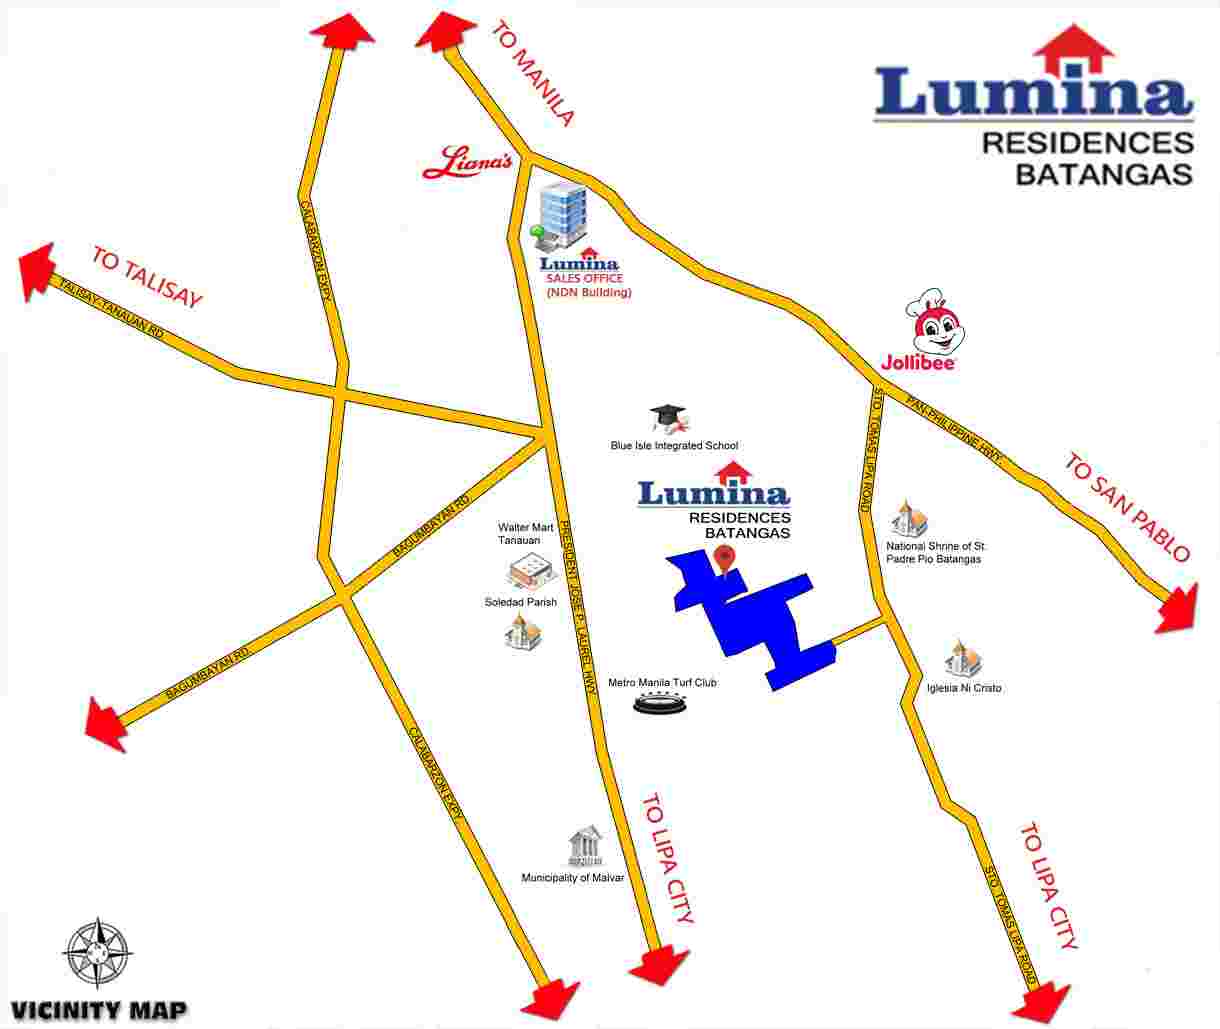 Lumina-Residences-Batangas-Vicinity-Map-revised-1655264832.jpg